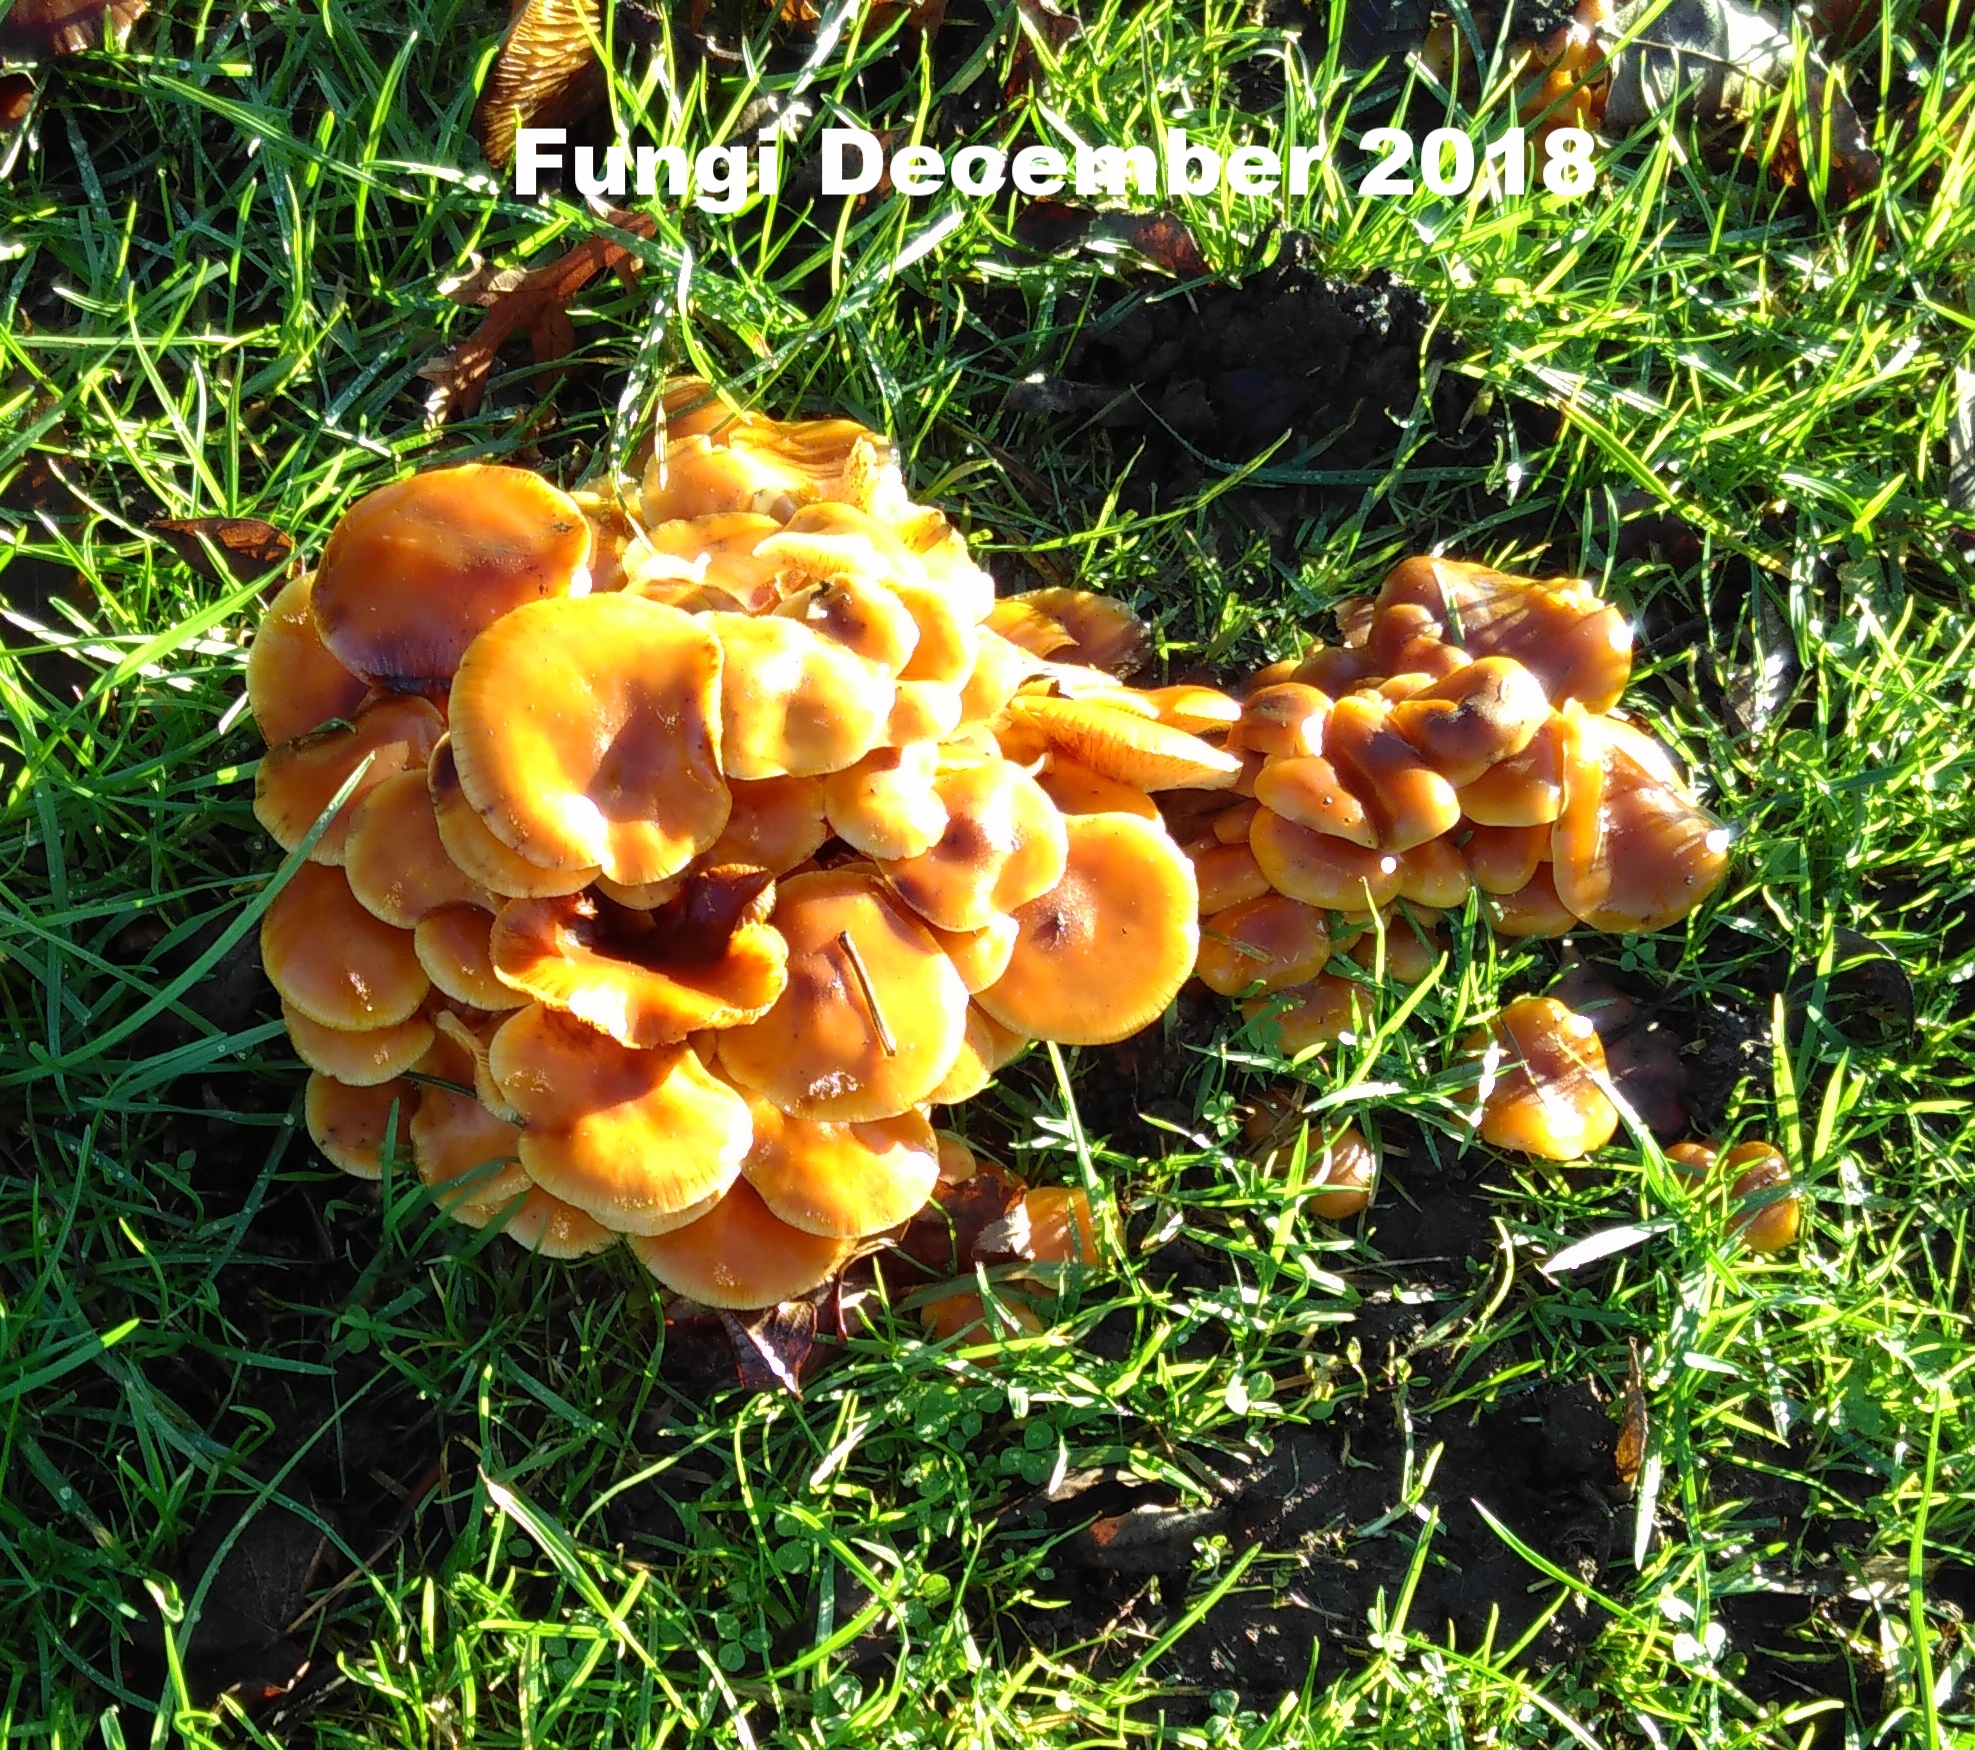 Fungus 9 Dec 18.jpg